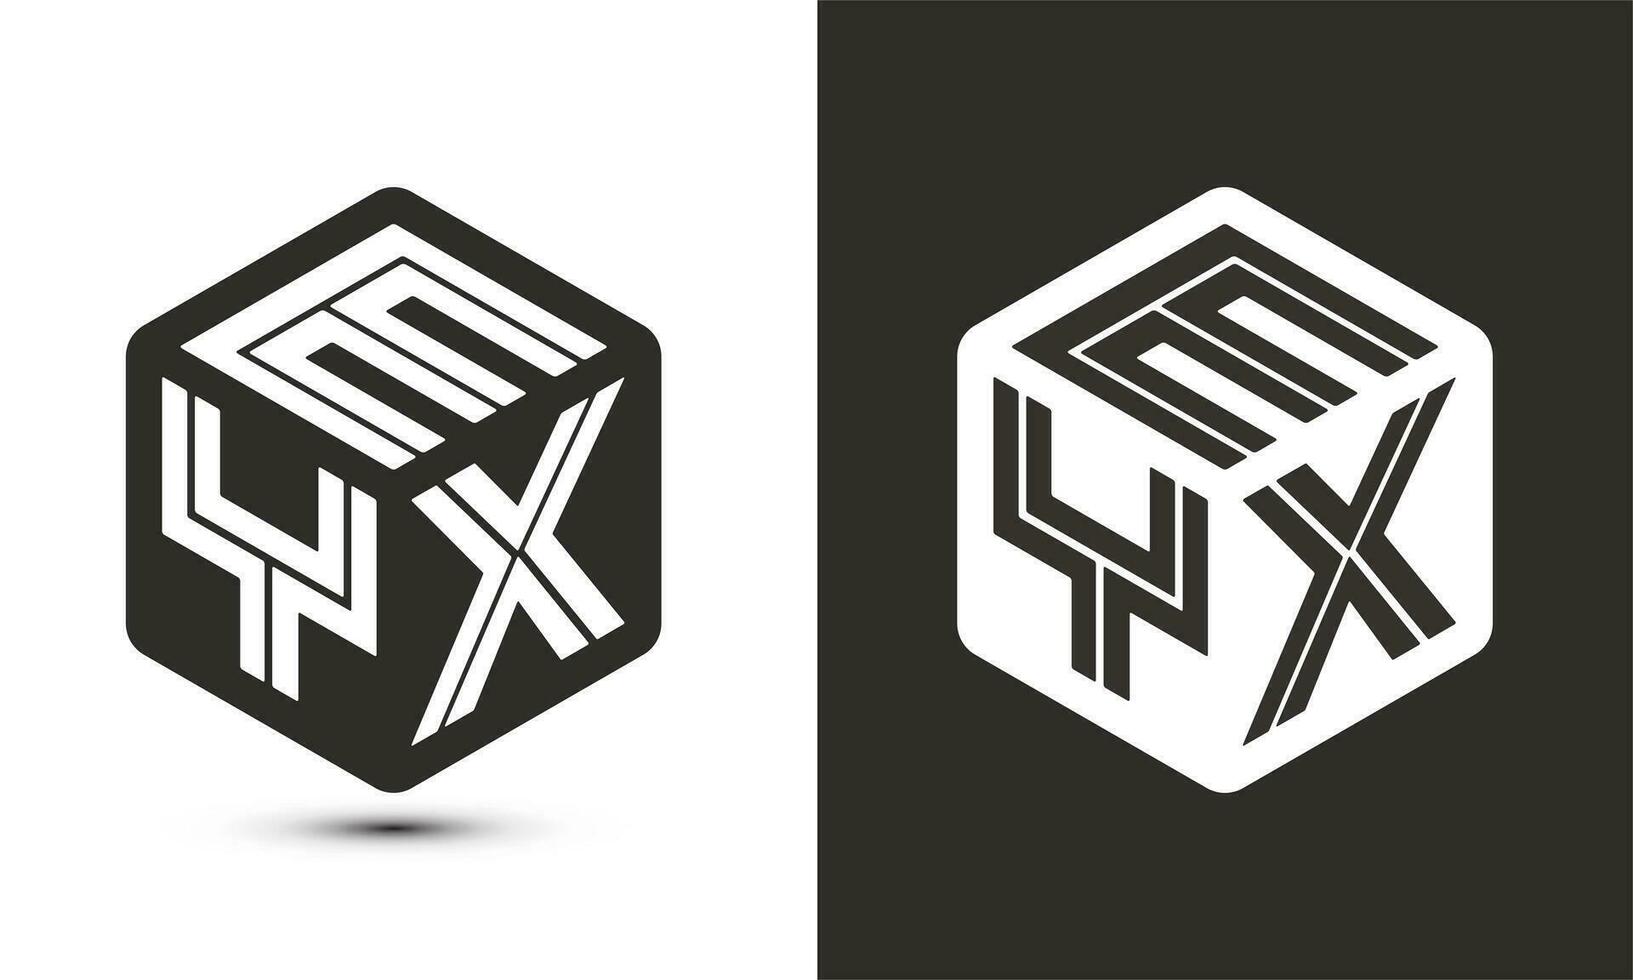 eyx letra logo diseño con ilustrador cubo logo, vector logo moderno alfabeto fuente superposición estilo.